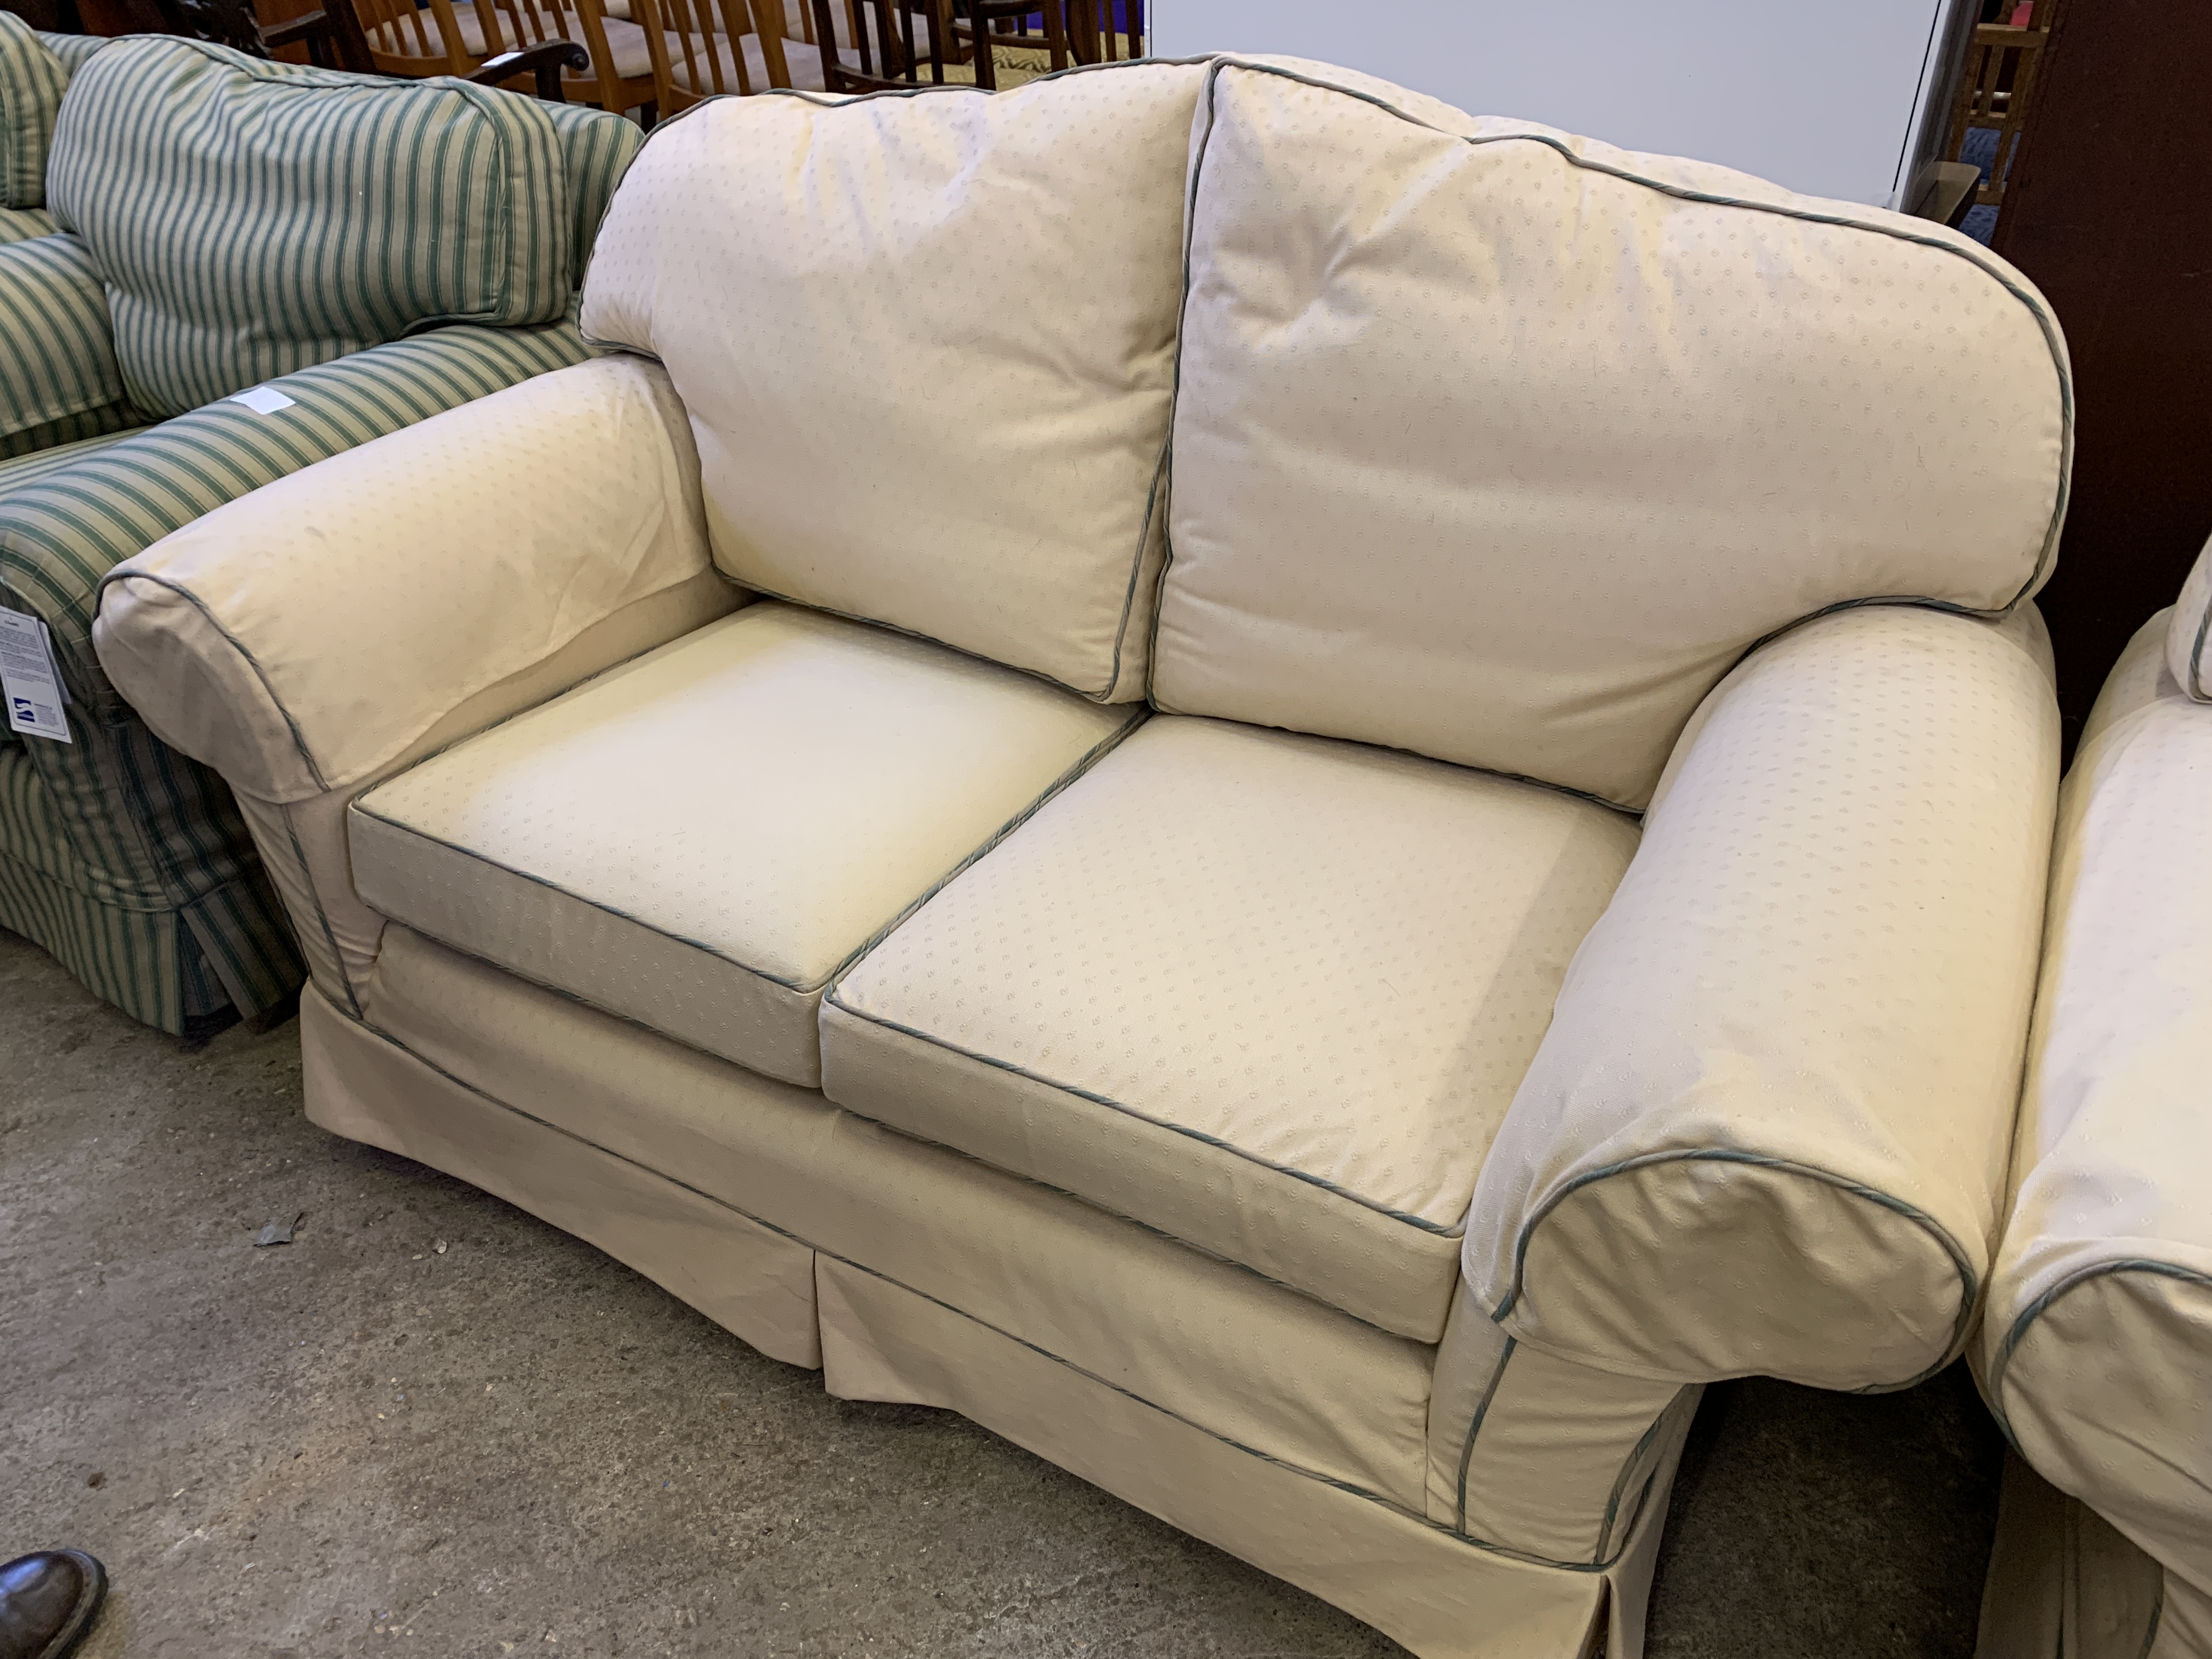 Cream two seat sofa - Image 4 of 4